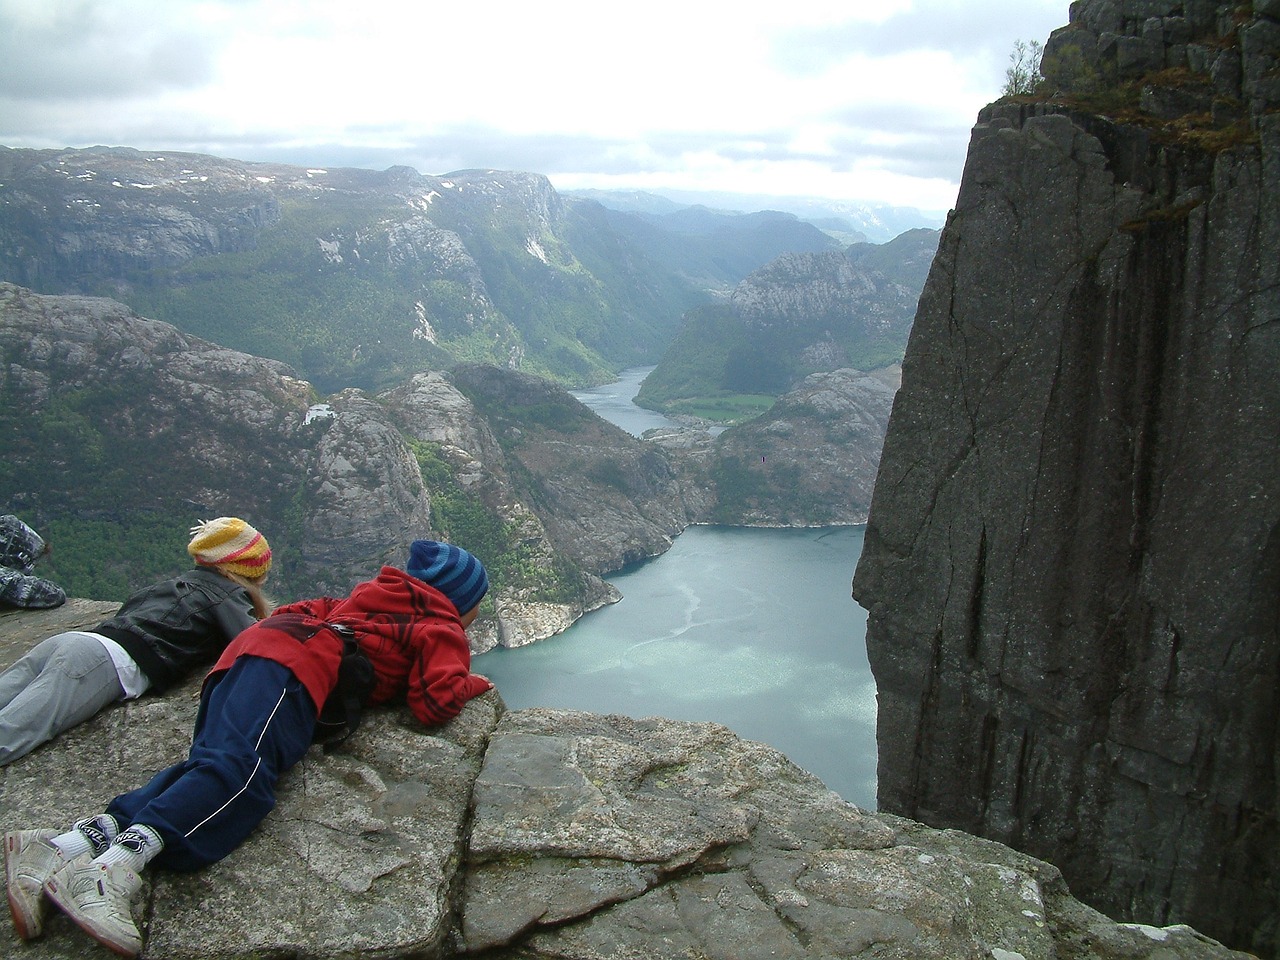 Прекестулен, Норвегия (Pulpit Rock, Norway)